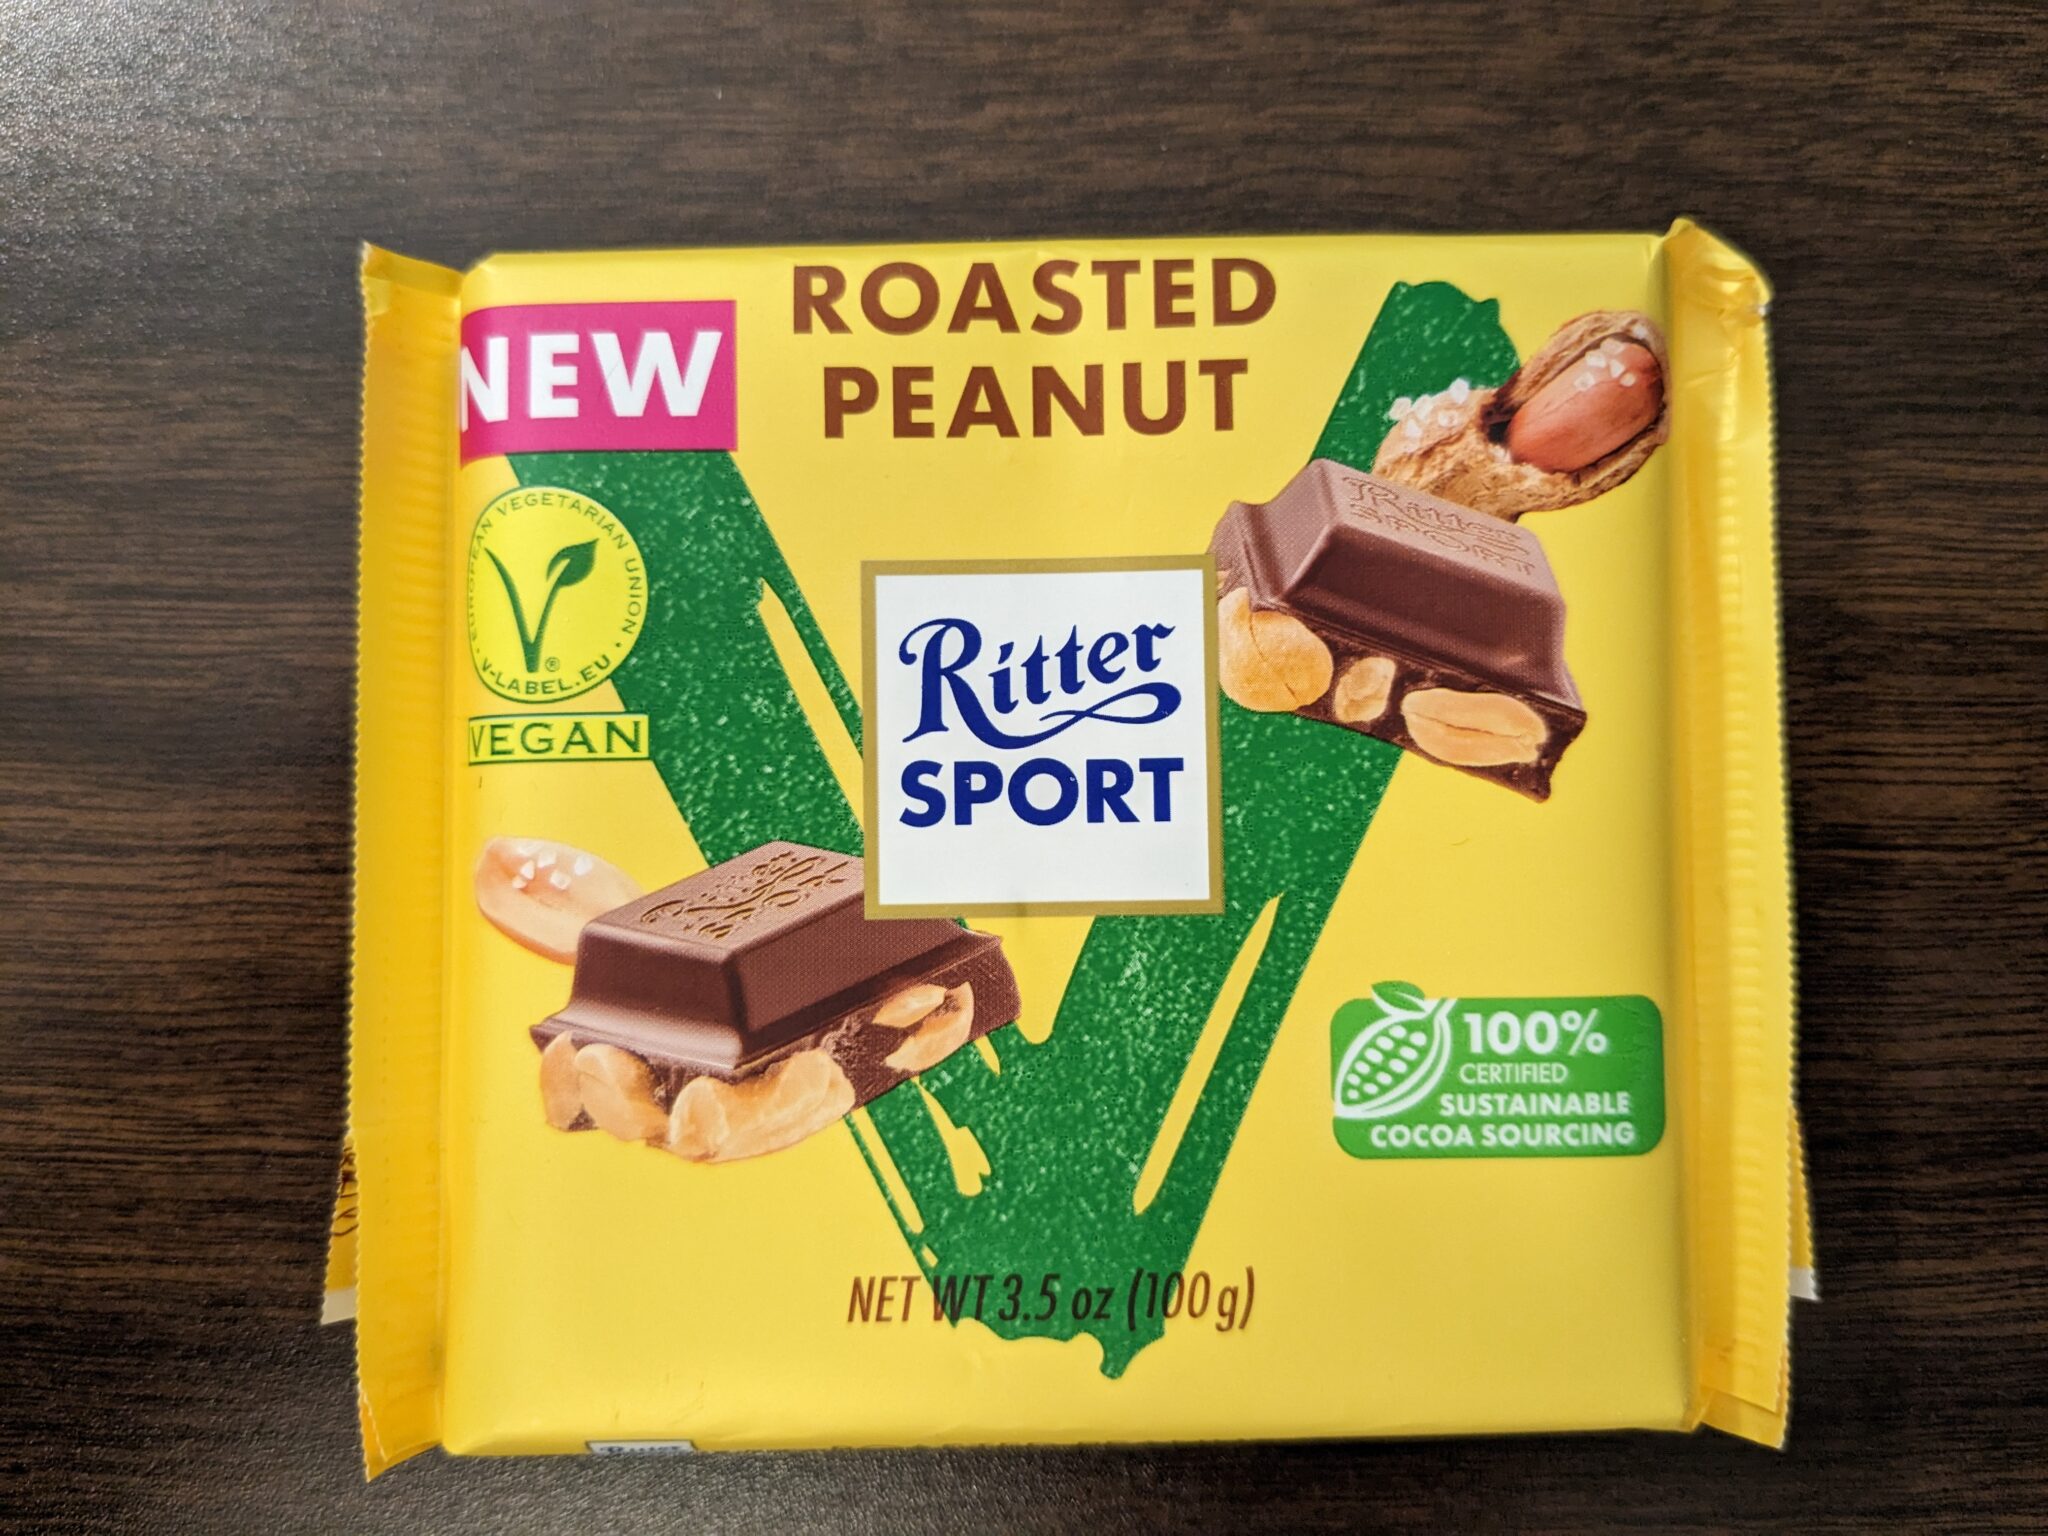 Ritter Sport – Vegan Roasted Peanut